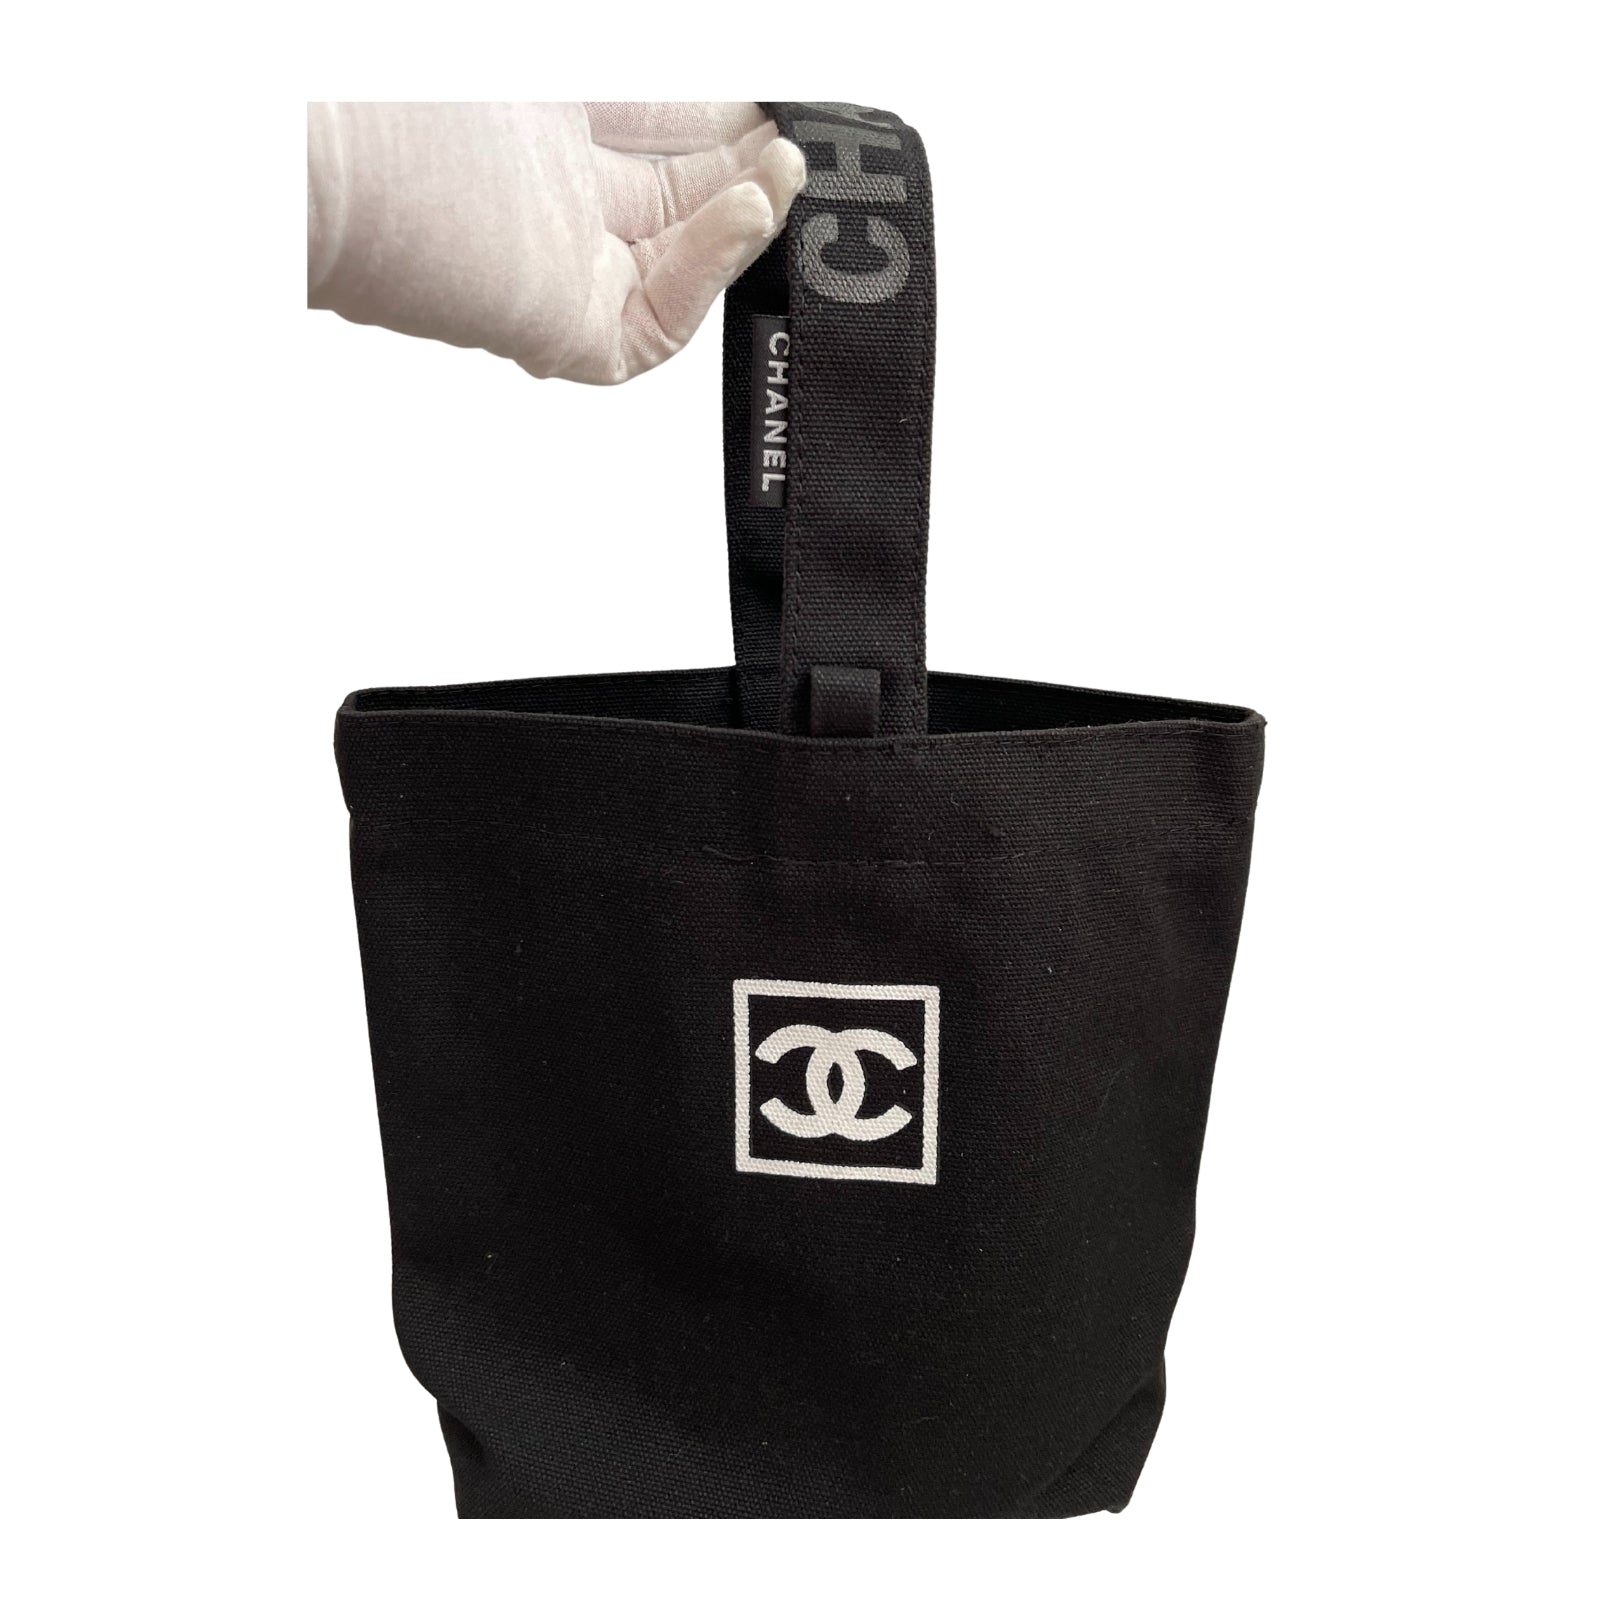 Shop Chanel Vip Tote Bag